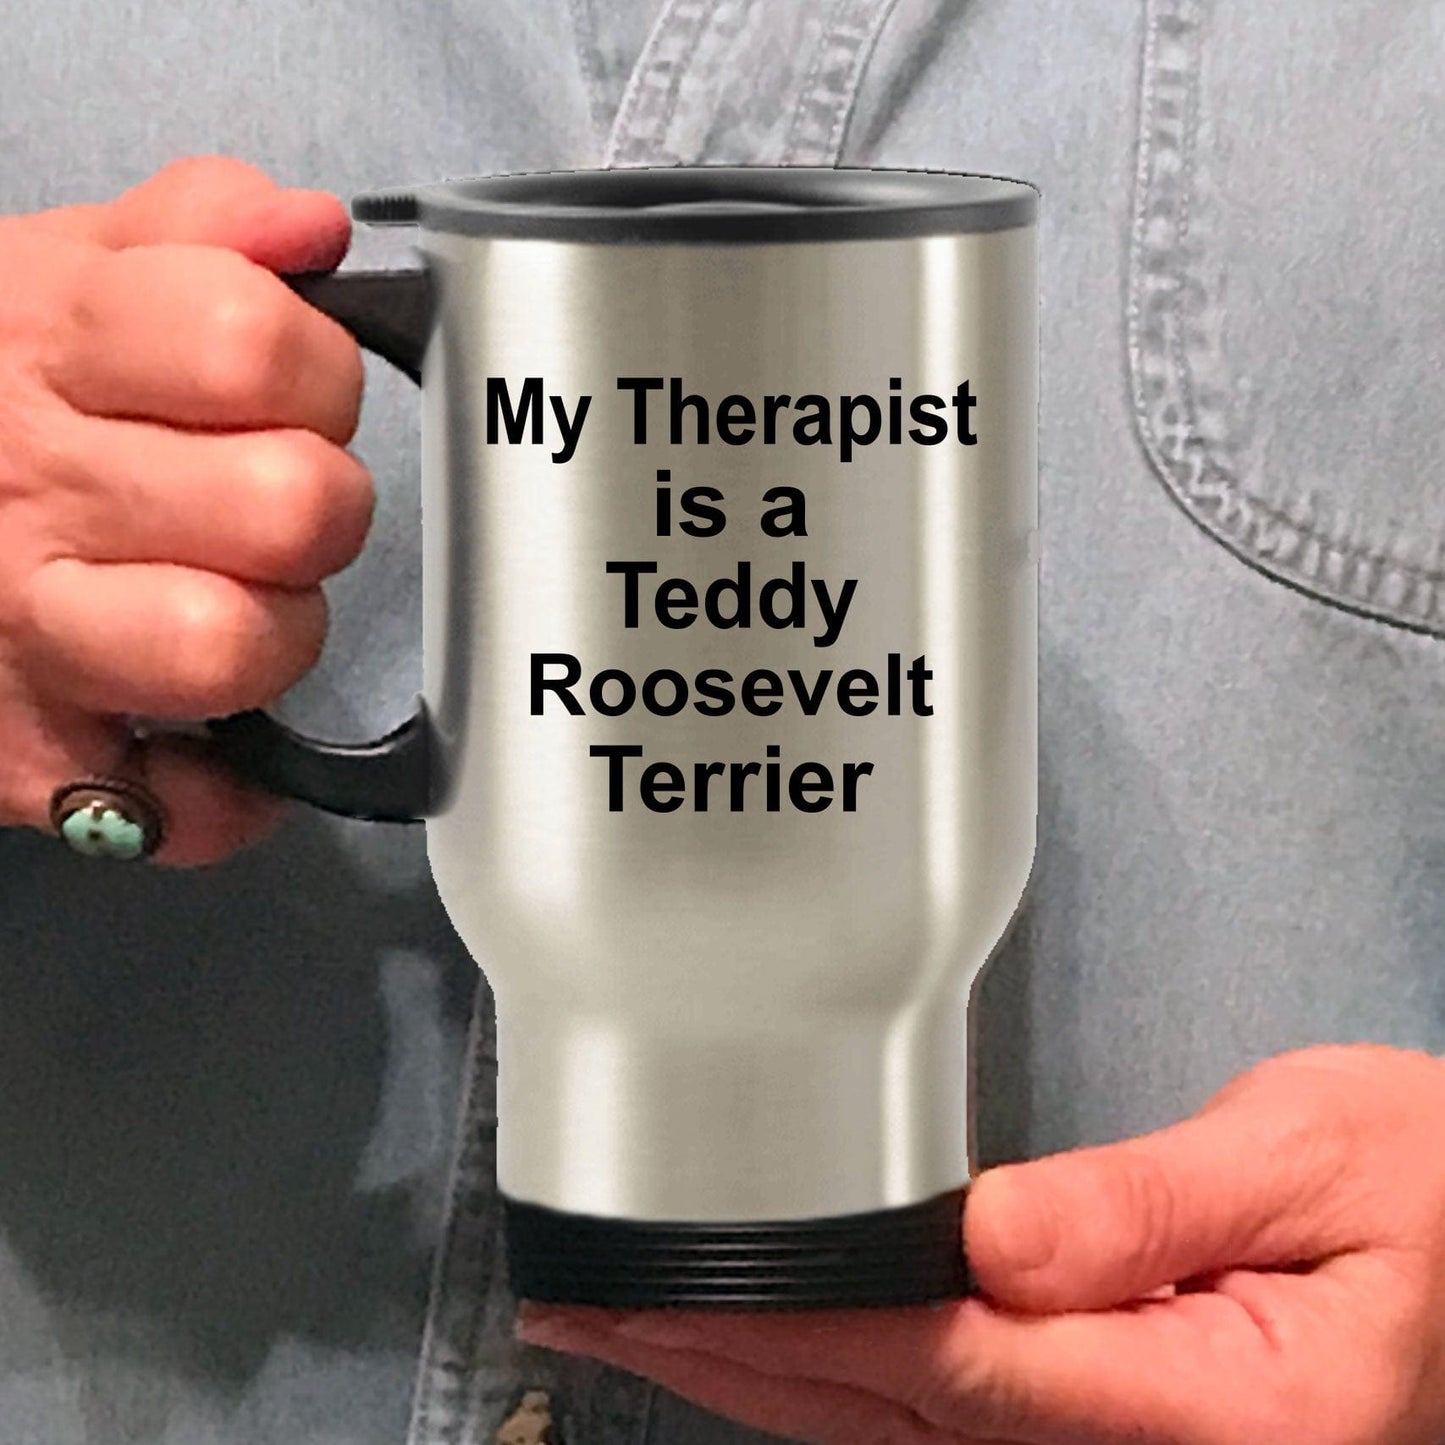 Teddy Roosevelt Terrier Dog Therapist Travel Coffee Mug